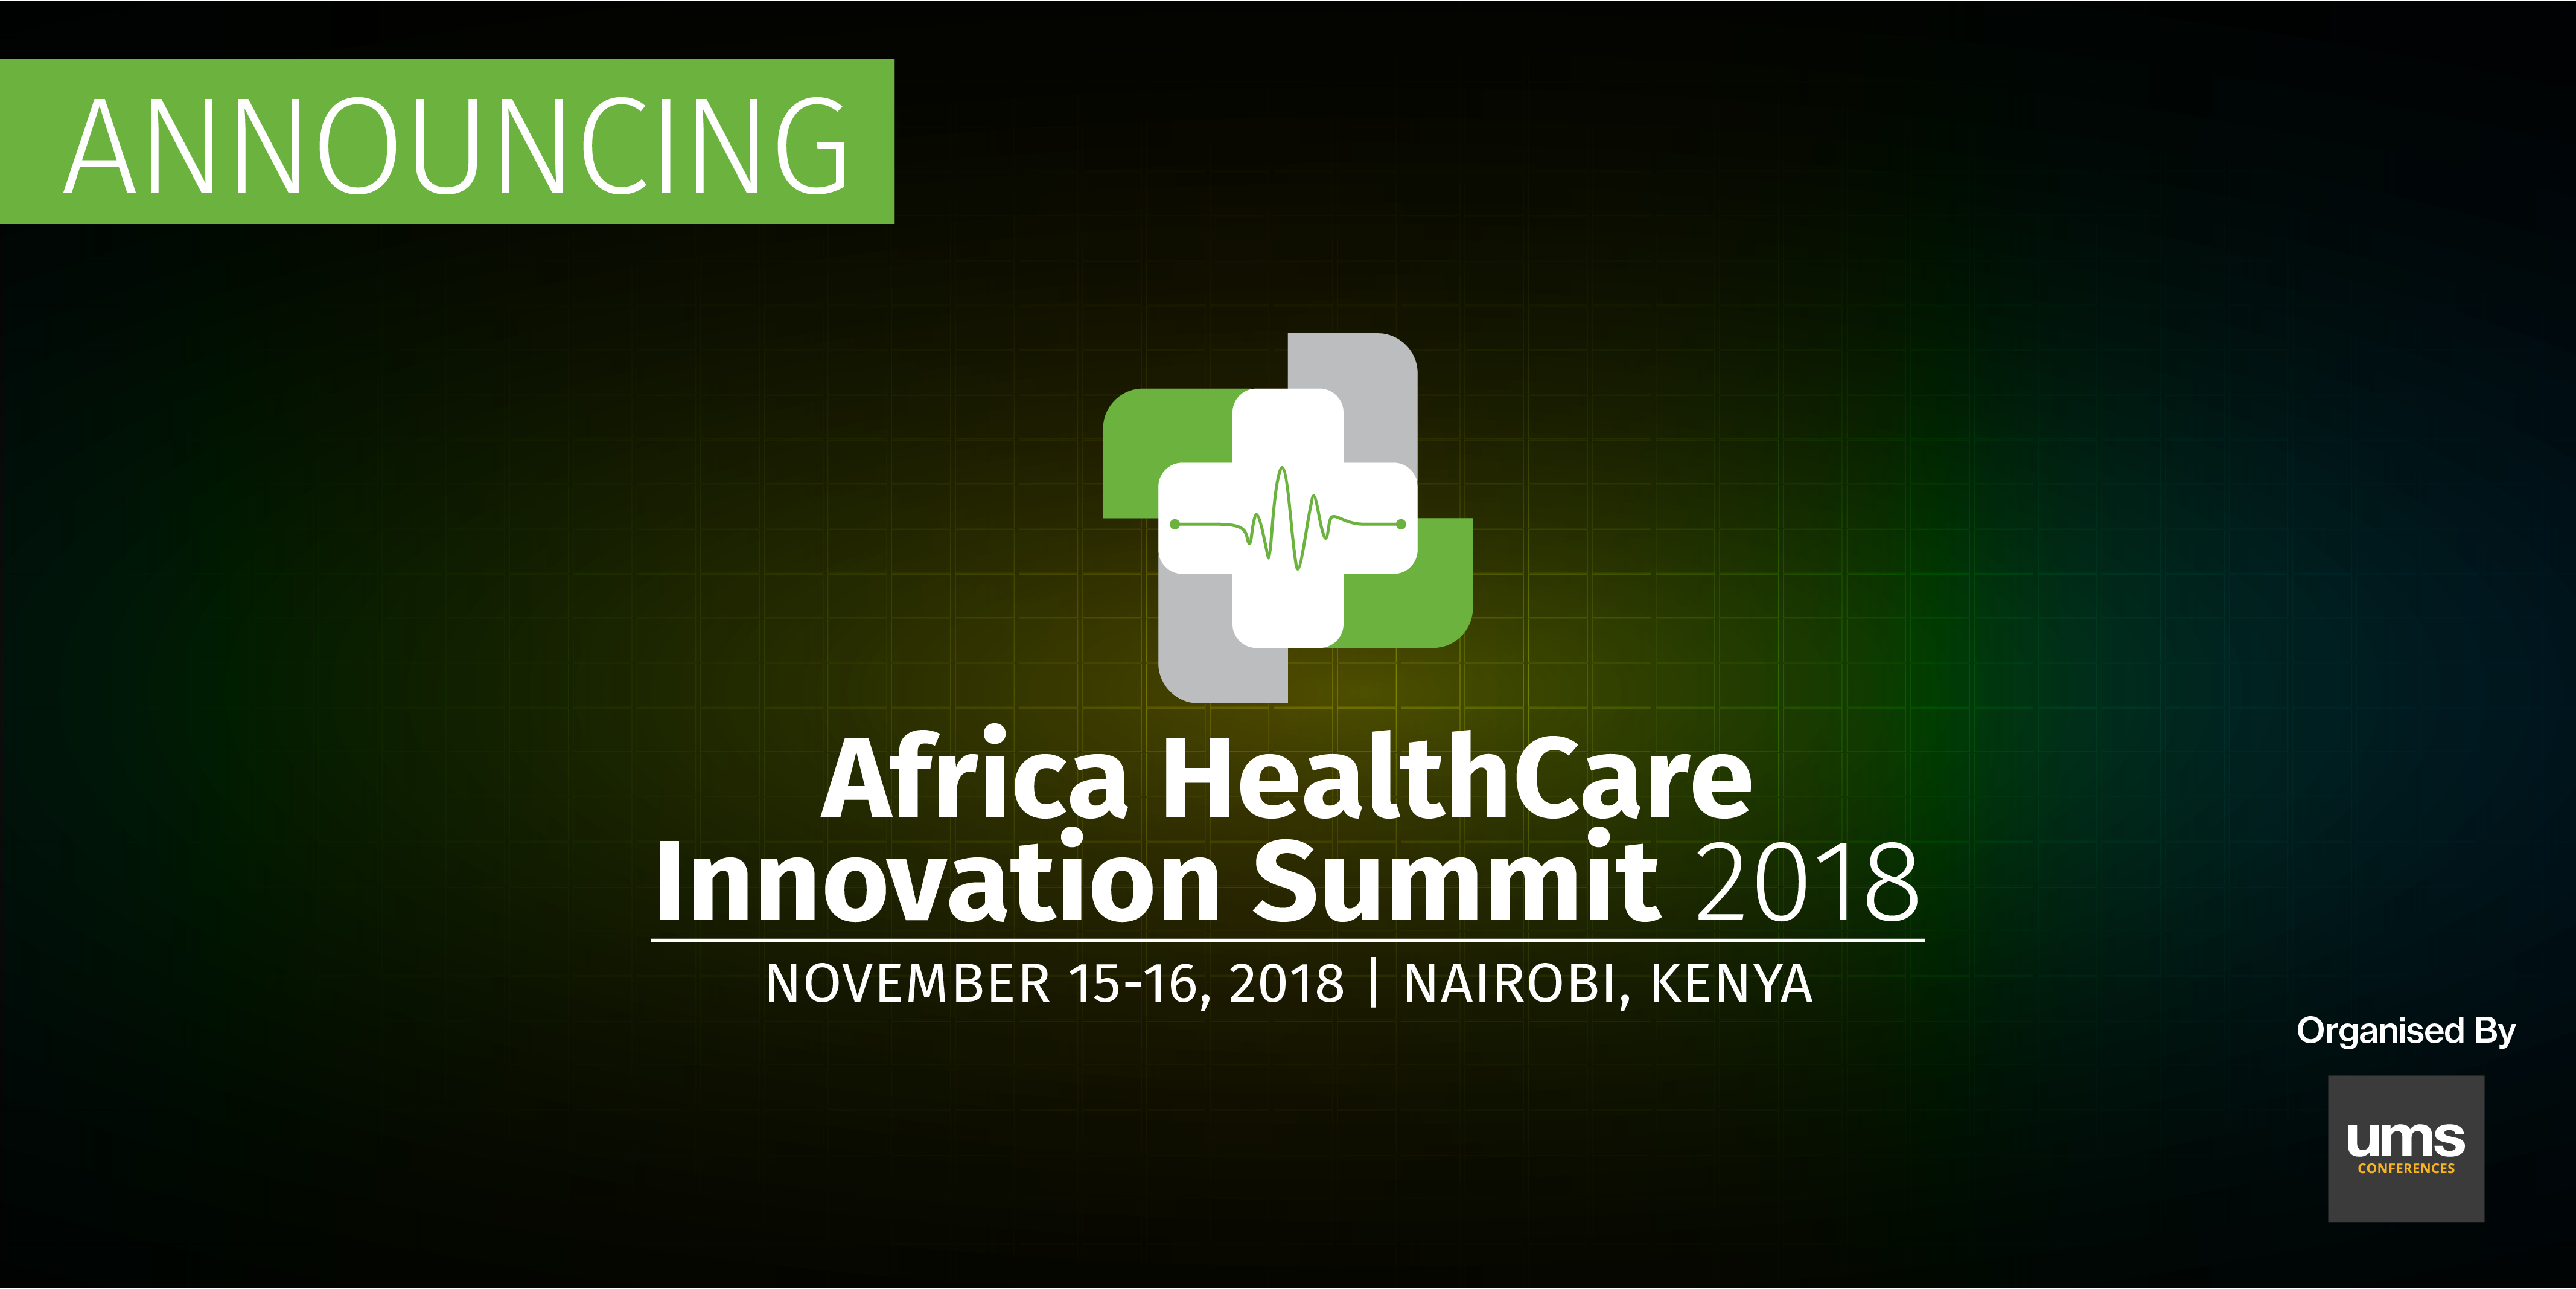 Africa HealthCare Innovation Summit 2018